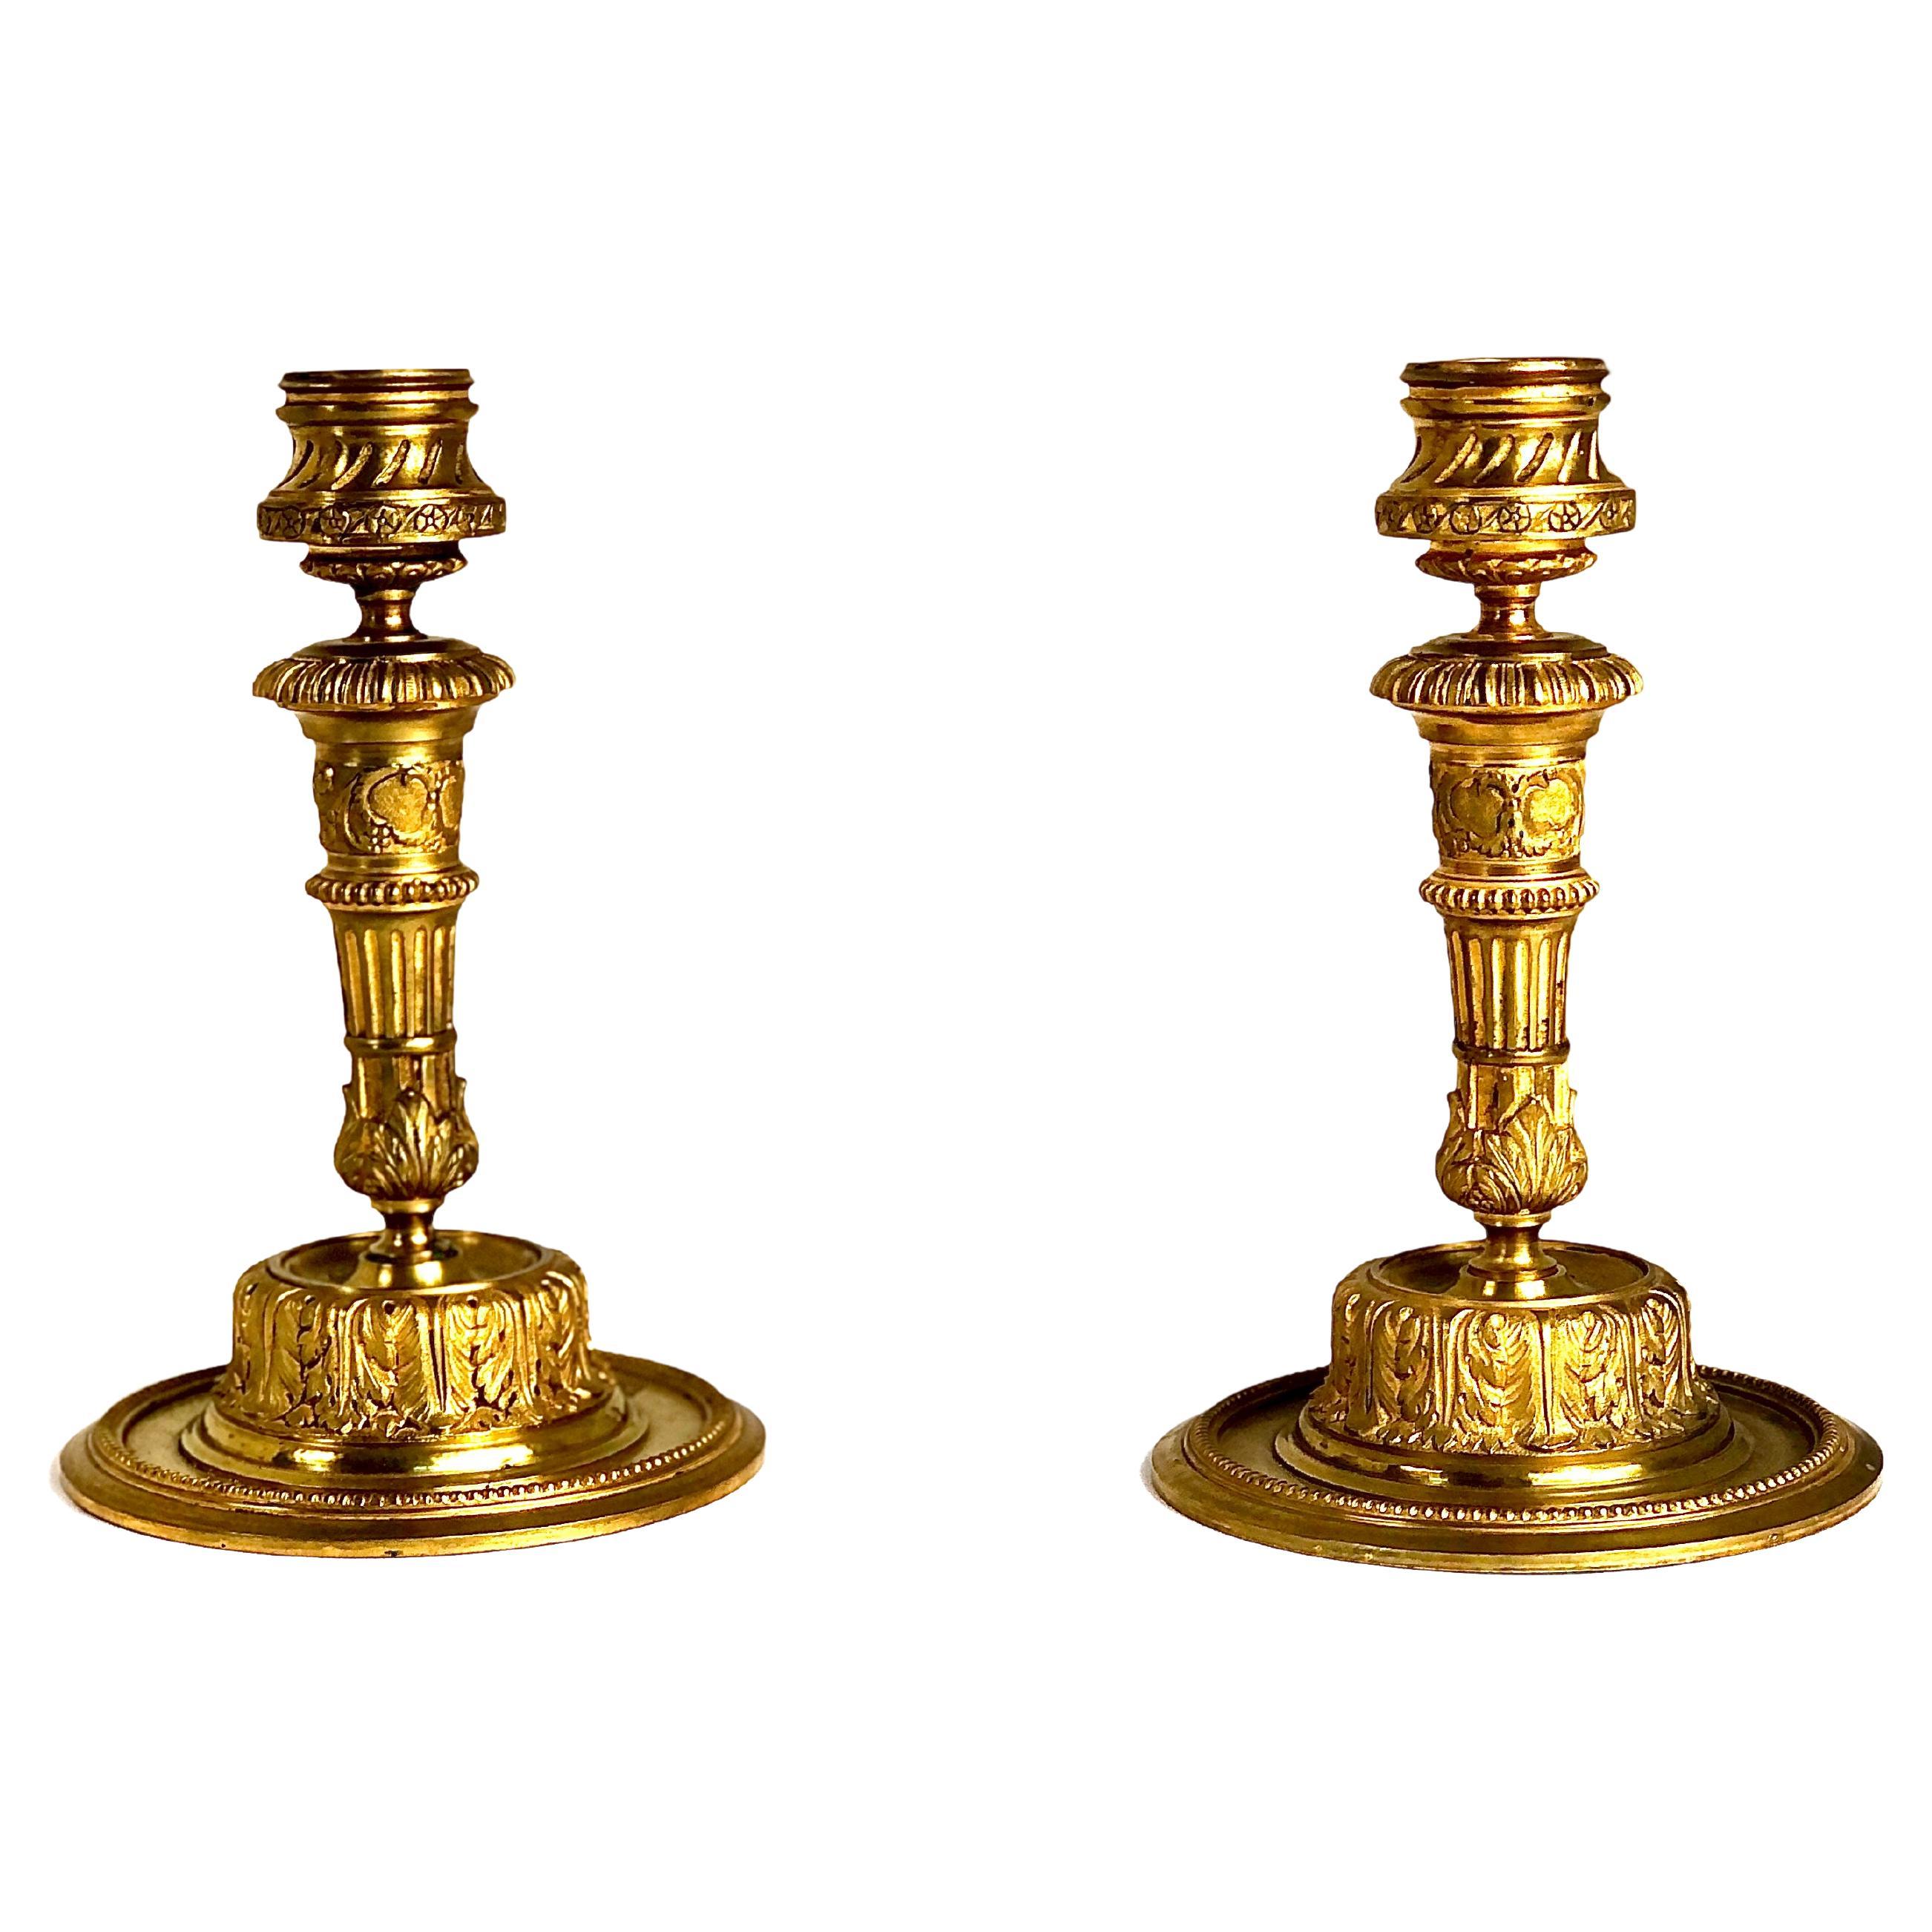 Pair of Ornate Gilt Bronze Candlesticks, 19th Century